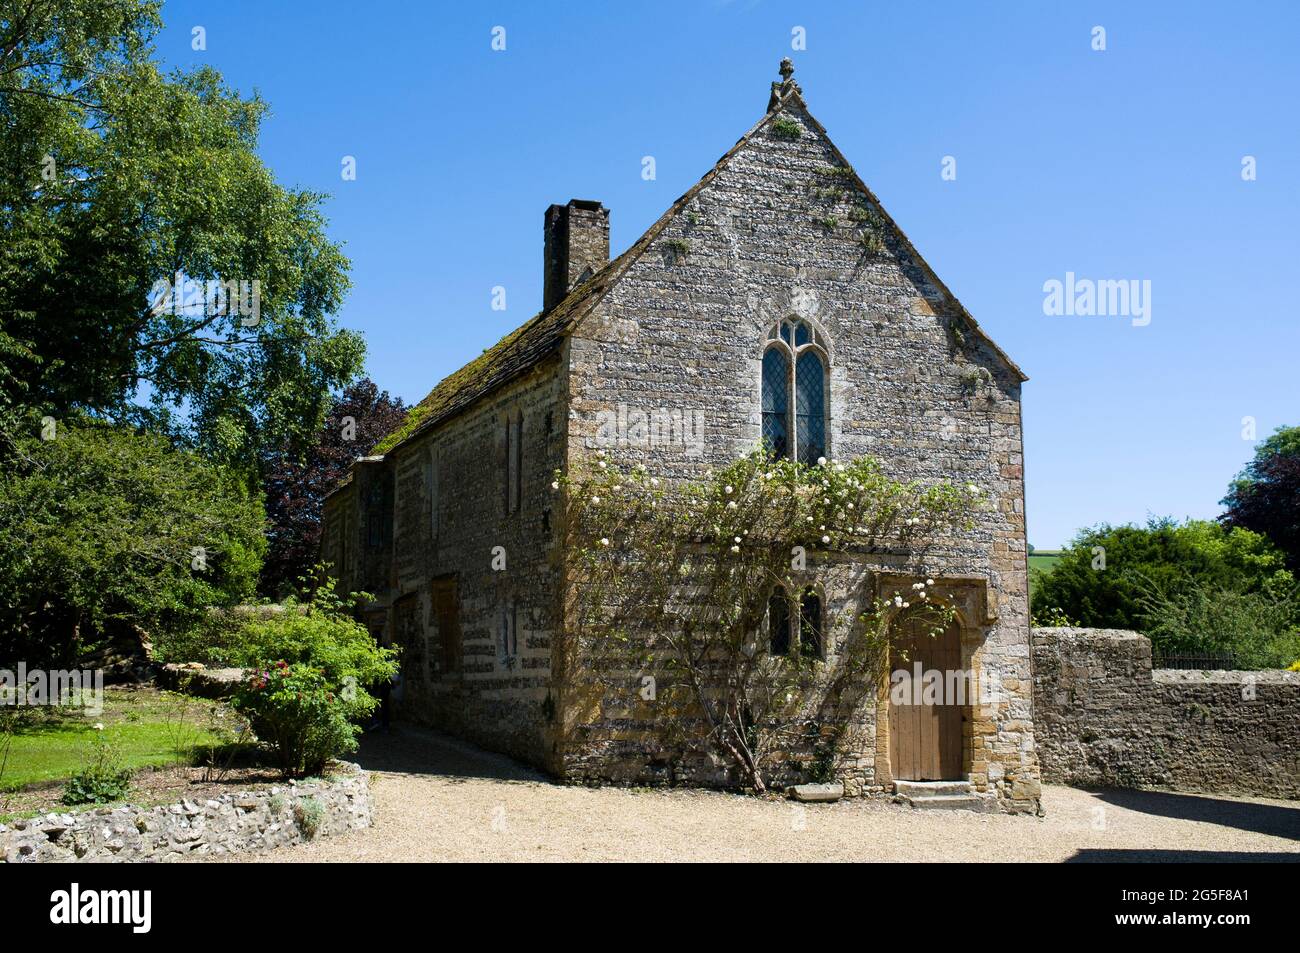 Cerne Abbey Guesthouse, Cerne Abbas, Dorset, UK.  22 Jul 2012 Stock Photo